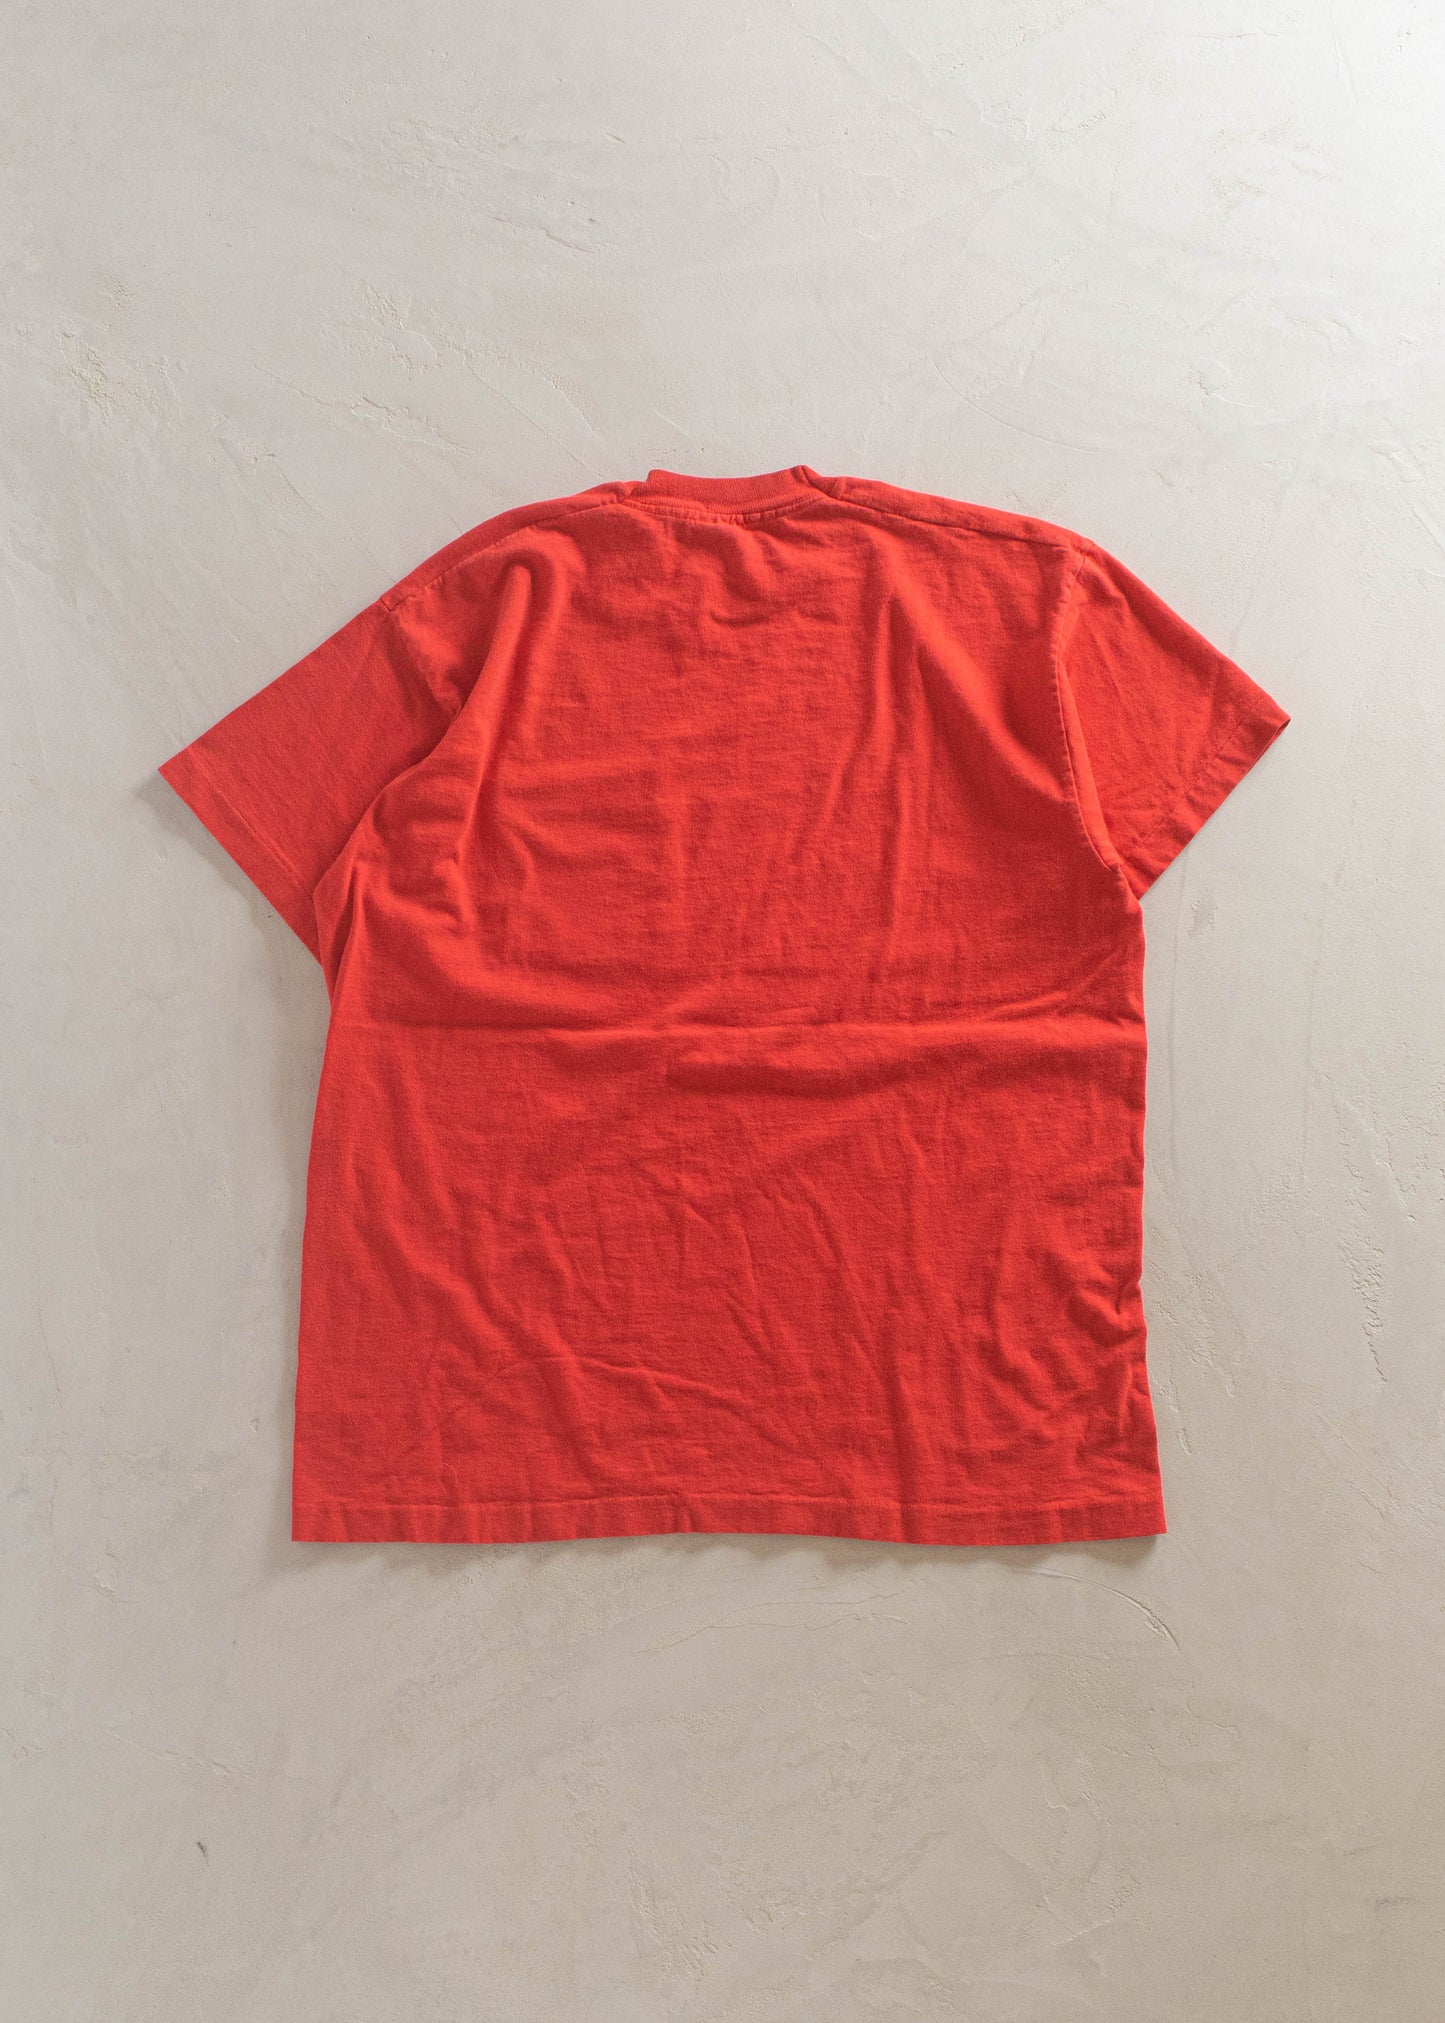 1980s BVD Selvedge Pocket T-Shirt Size L/XL